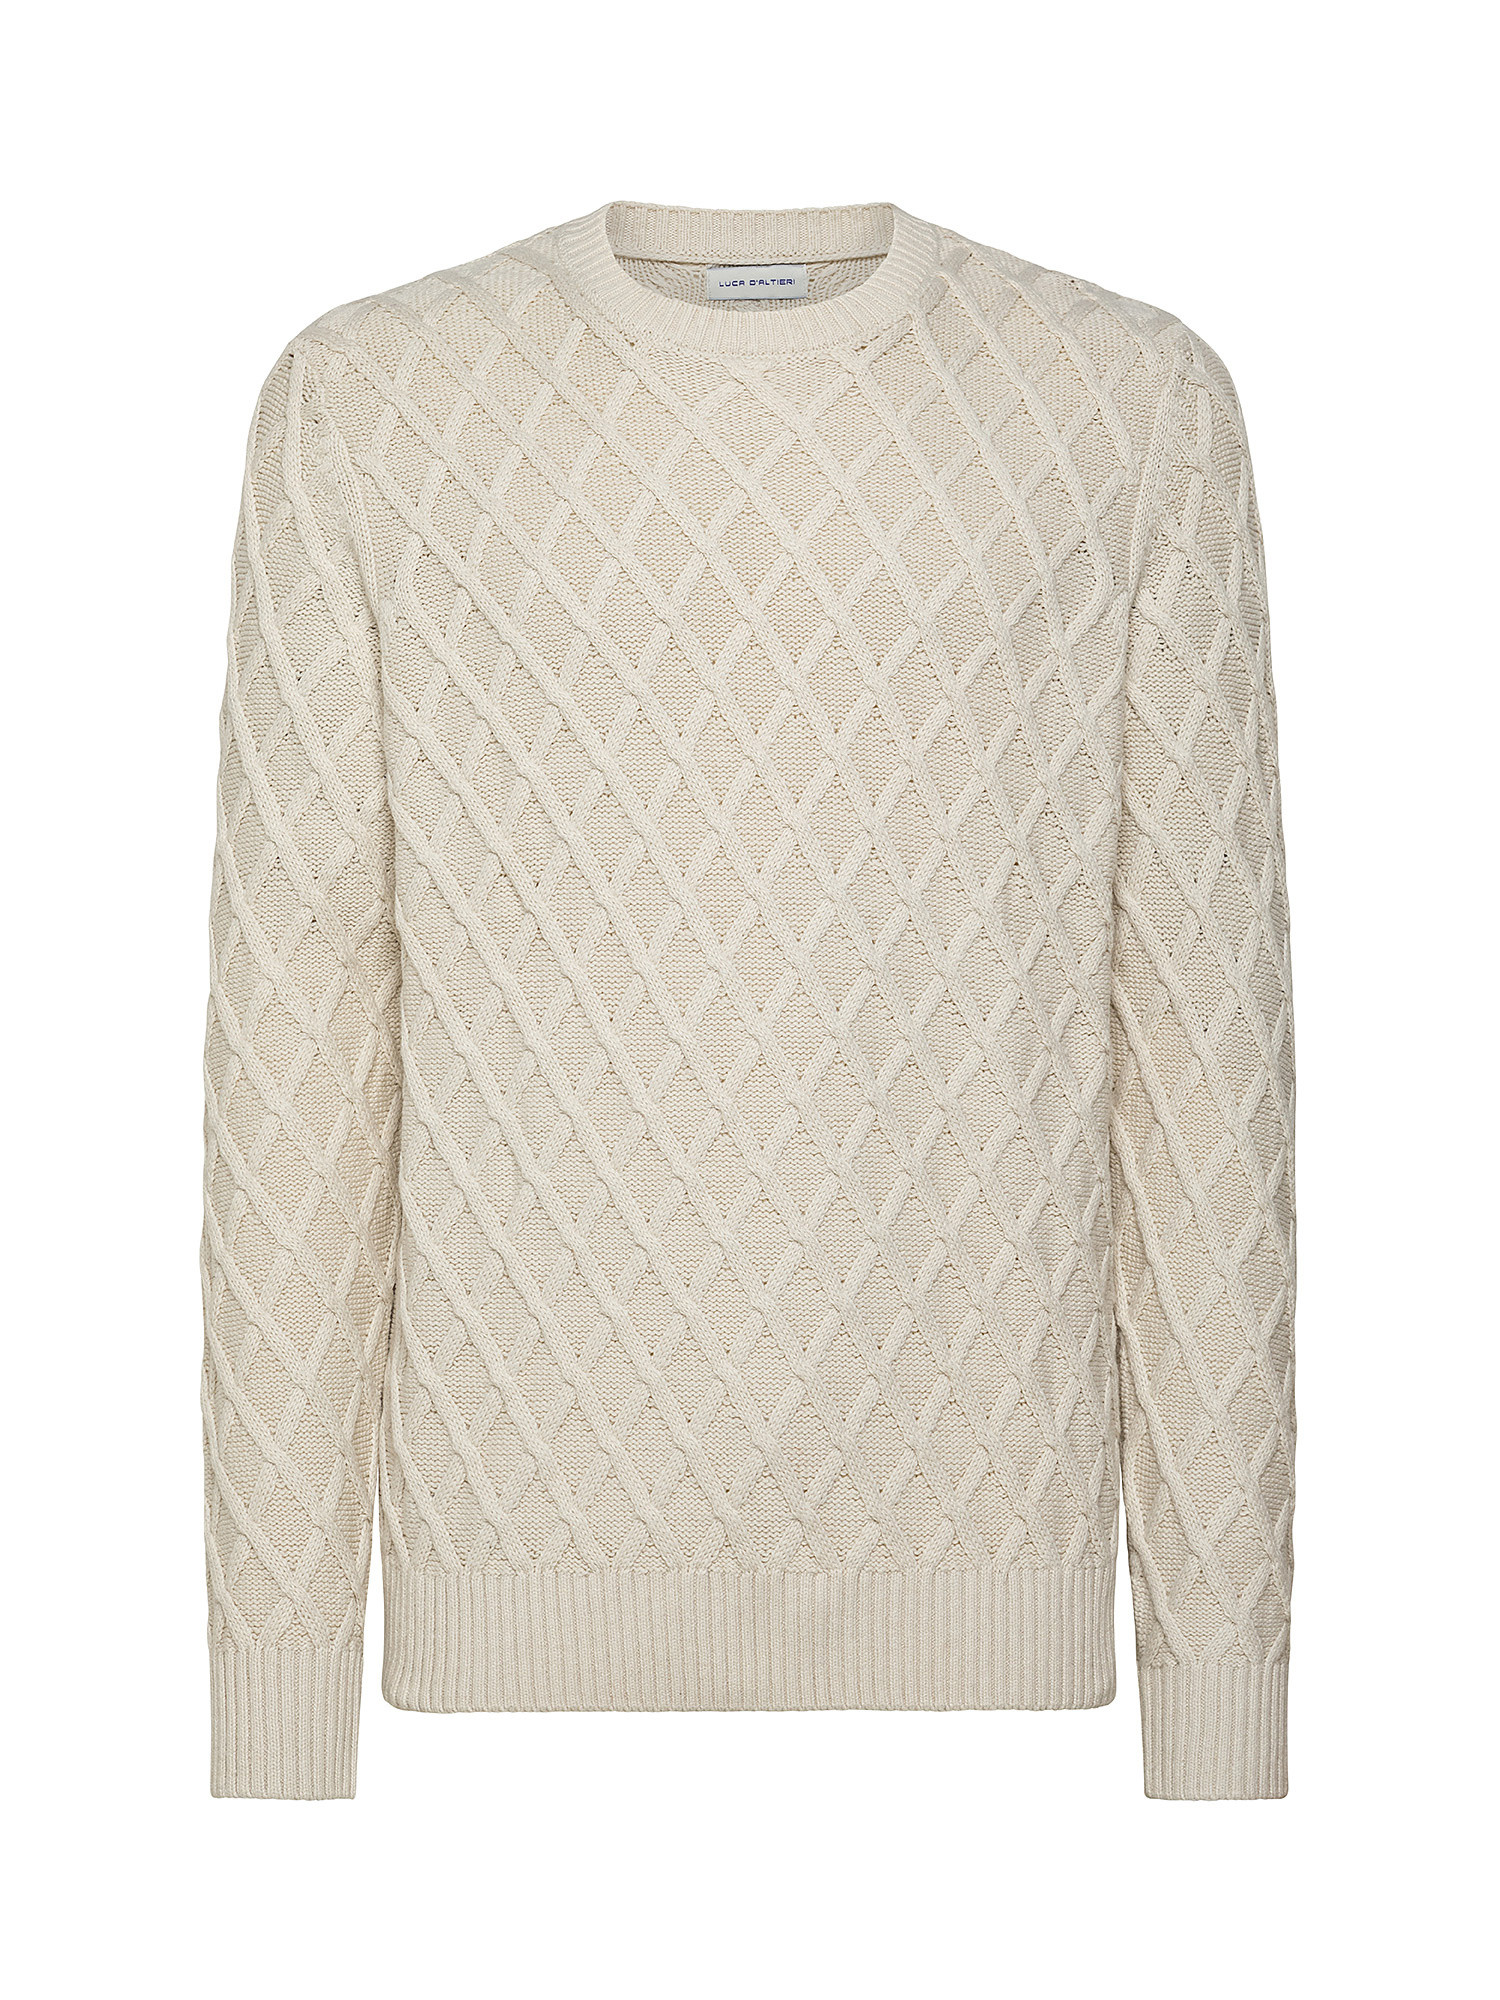 Jacquard braid crewneck sweater, White Cream, large image number 0